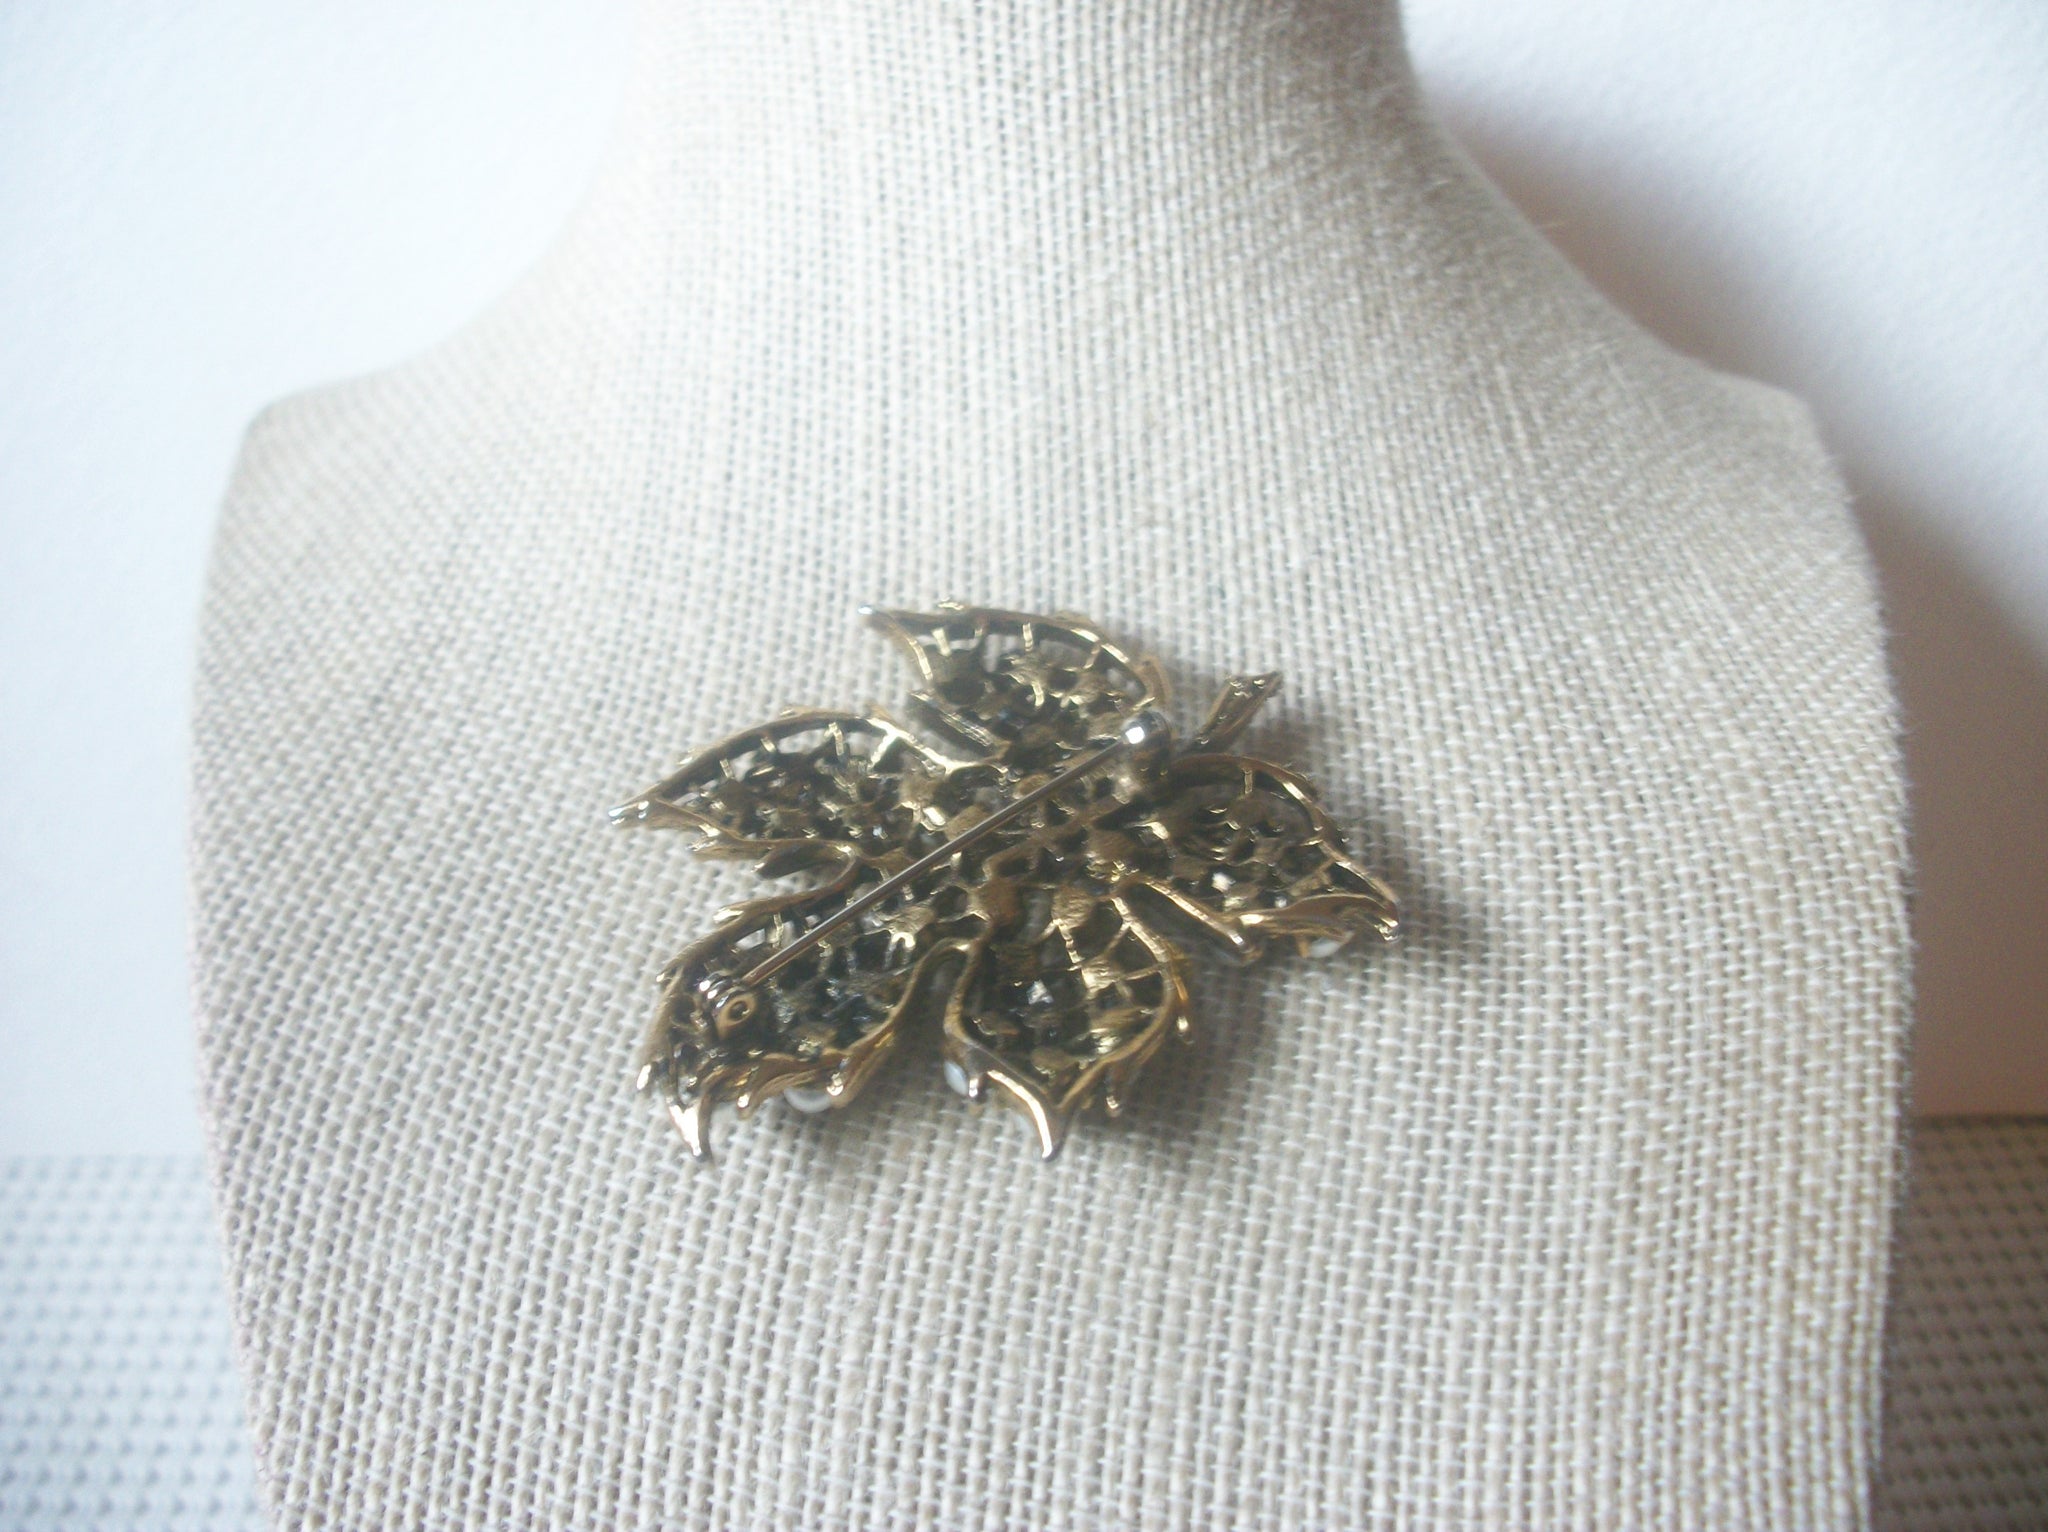 Larger, Vintage Brooch Pin, Maple Leaf, White Glass Pearls, Darkened Black, Gold Tone, 021921